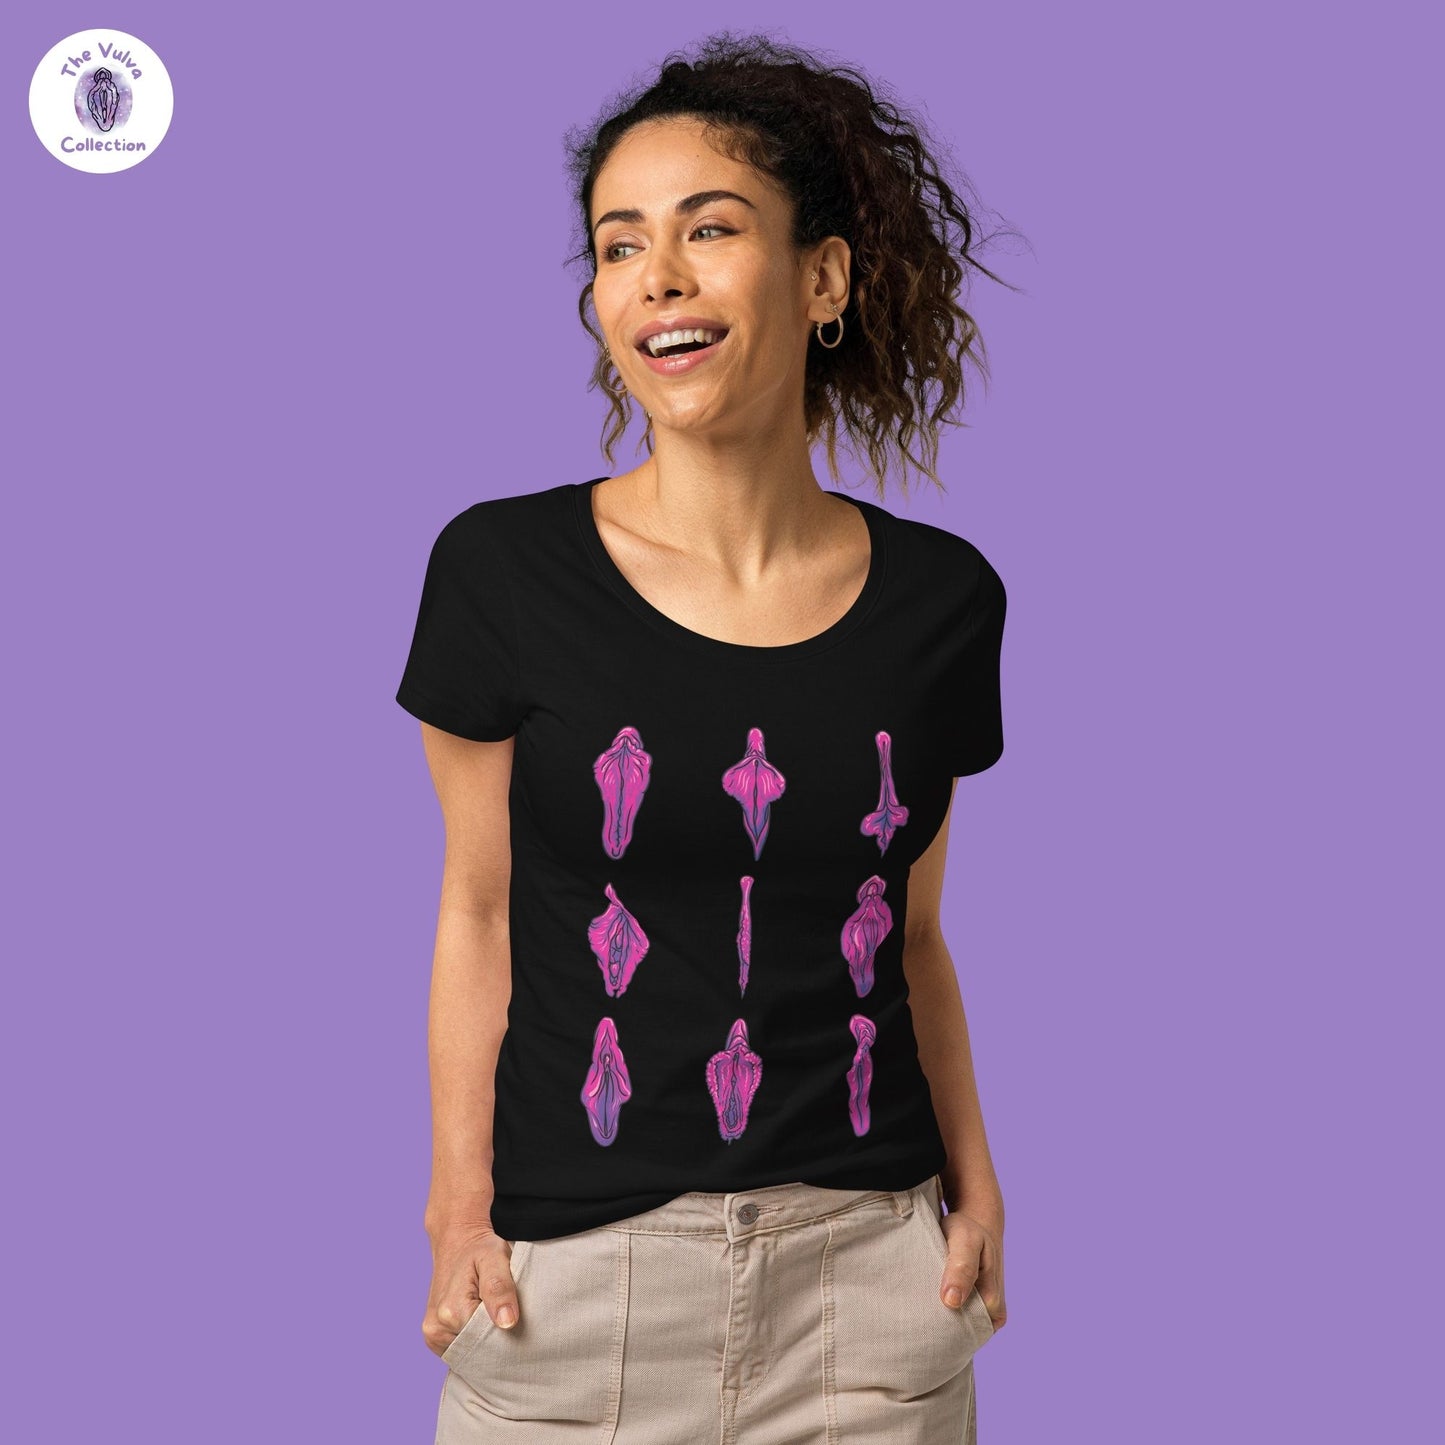 Vulva T-Shirt "My Friends and I" Pink Slim Fit Organic Round Collar